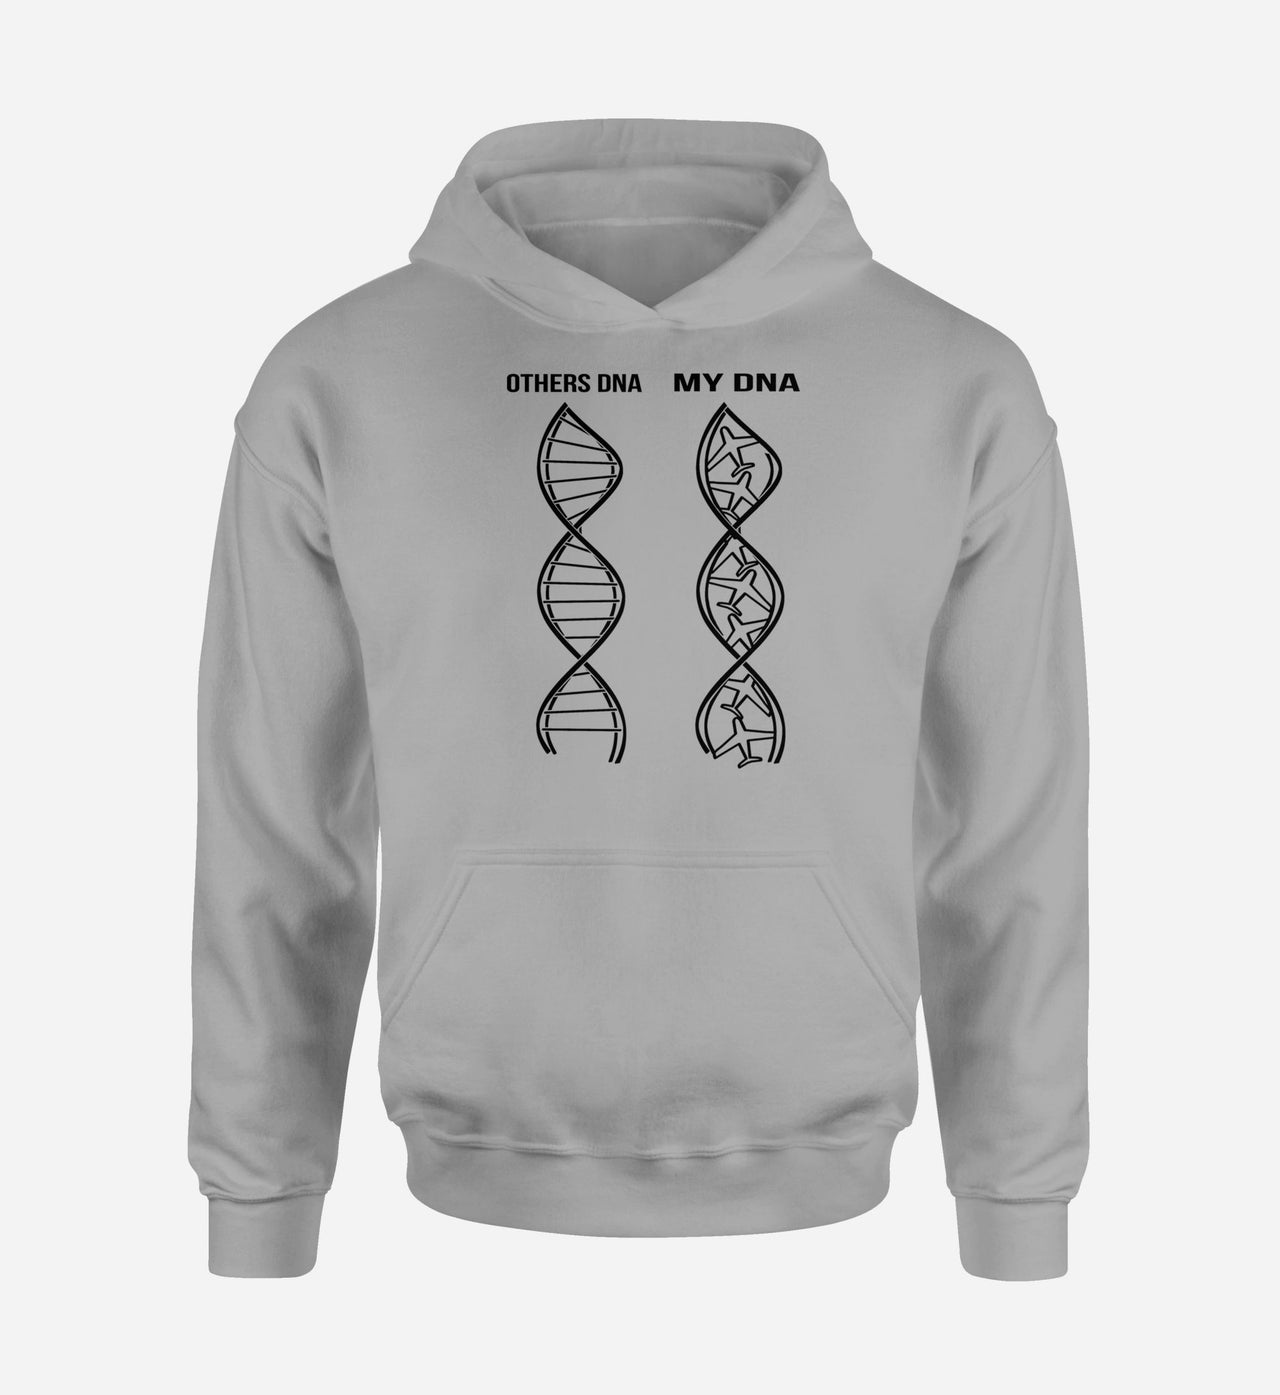 Aviation DNA Designed Hoodies